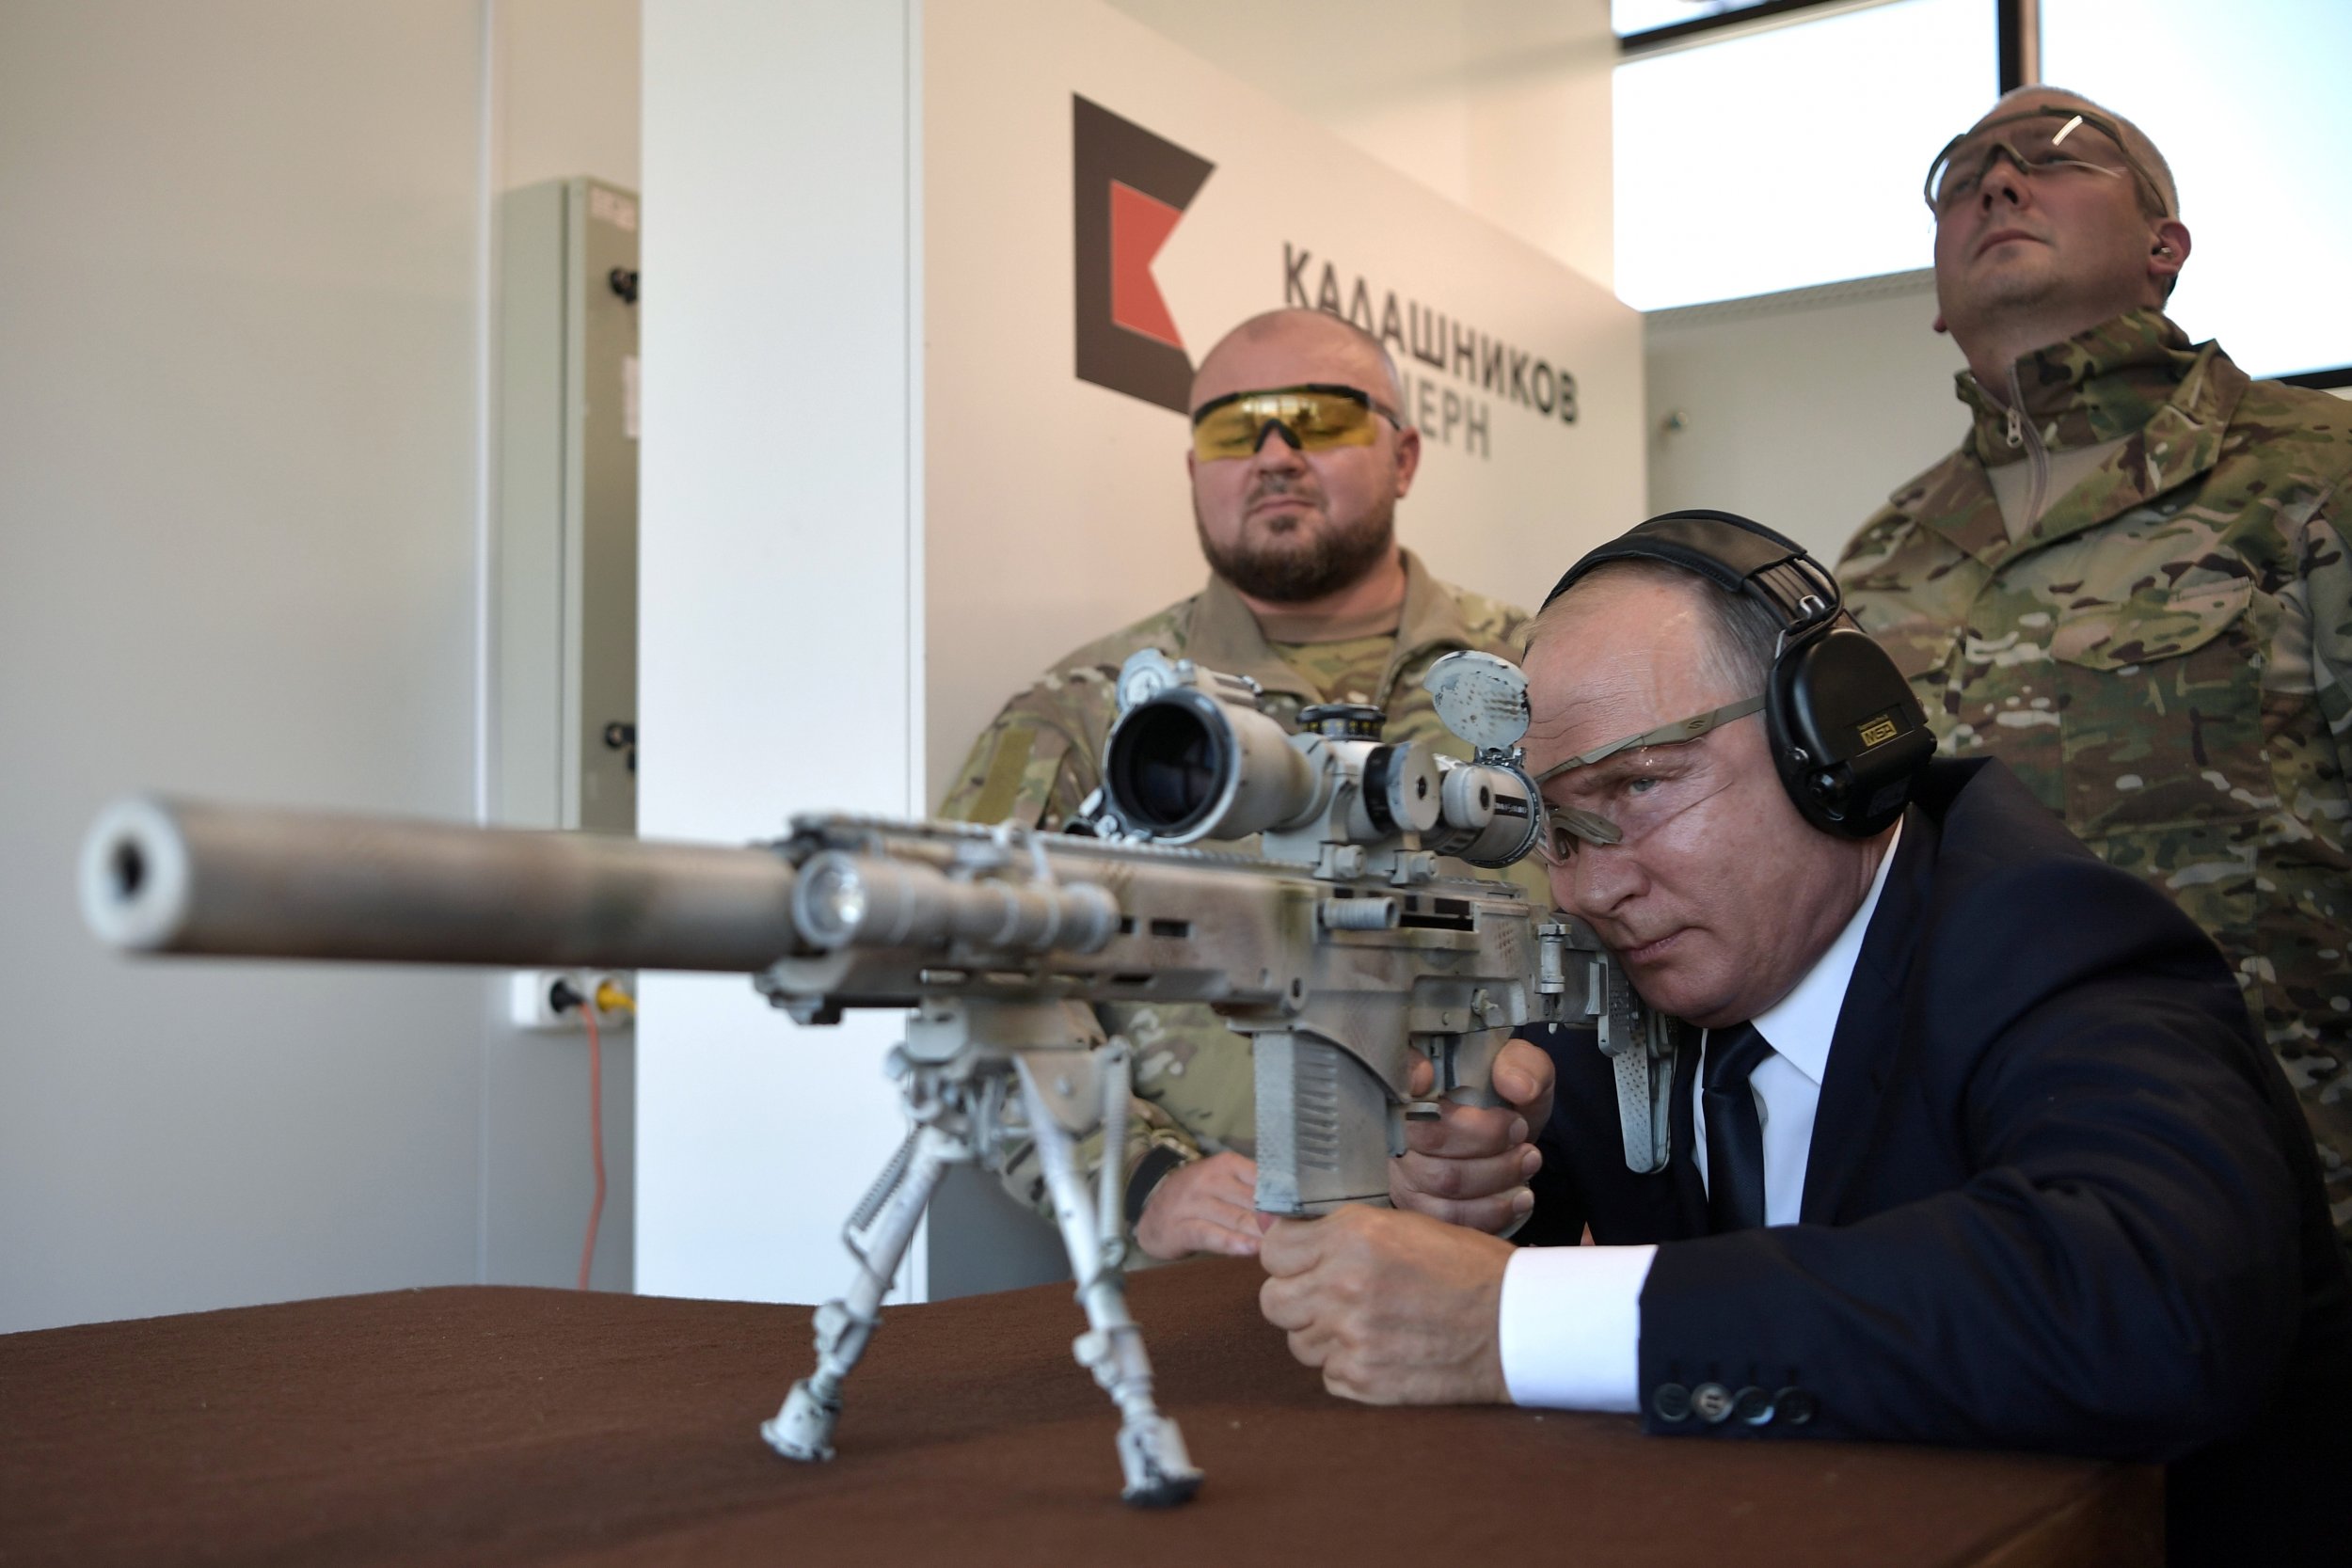 Video: Vladimir Putin Fires New Kalashnikov Rifle